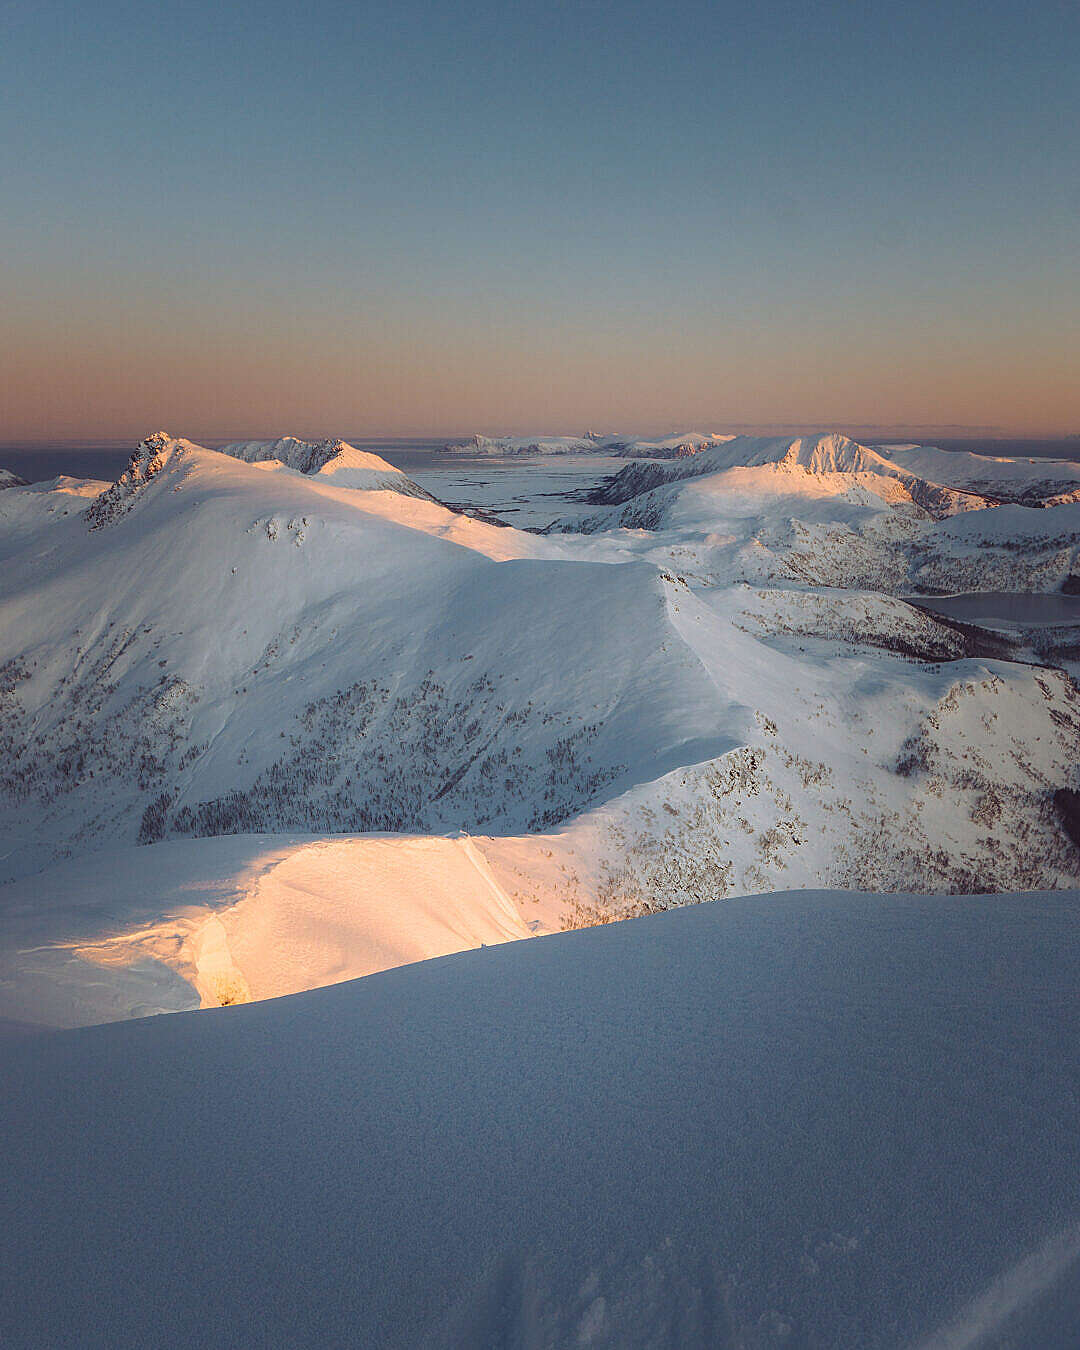 Download Snowy Mountain Peaks in Sunrise Light FREE Stock Photo